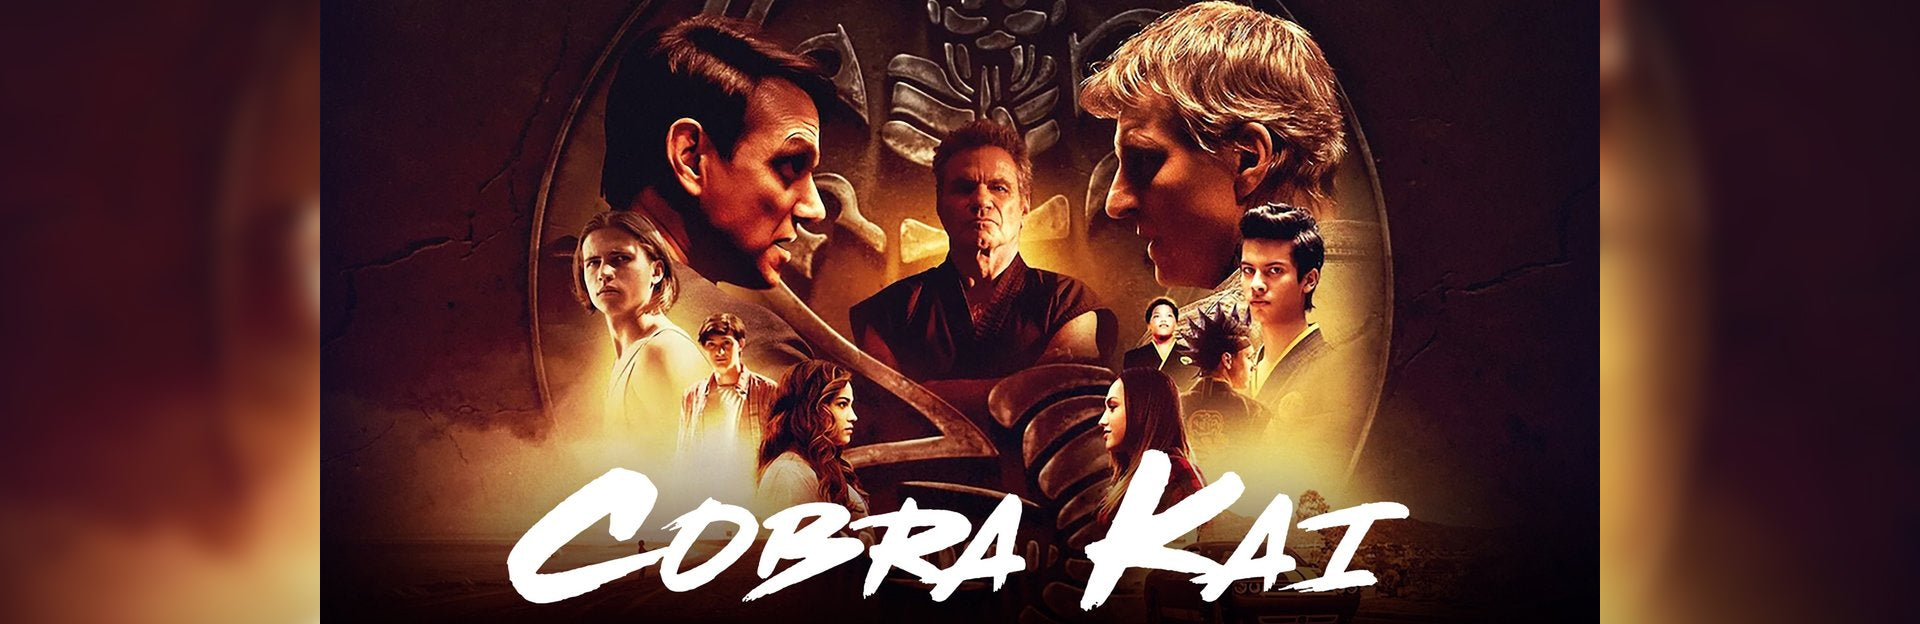 Cobra Kai' Fans, Ralph Macchio Just Shared a Super Exciting Season 6  Release Update